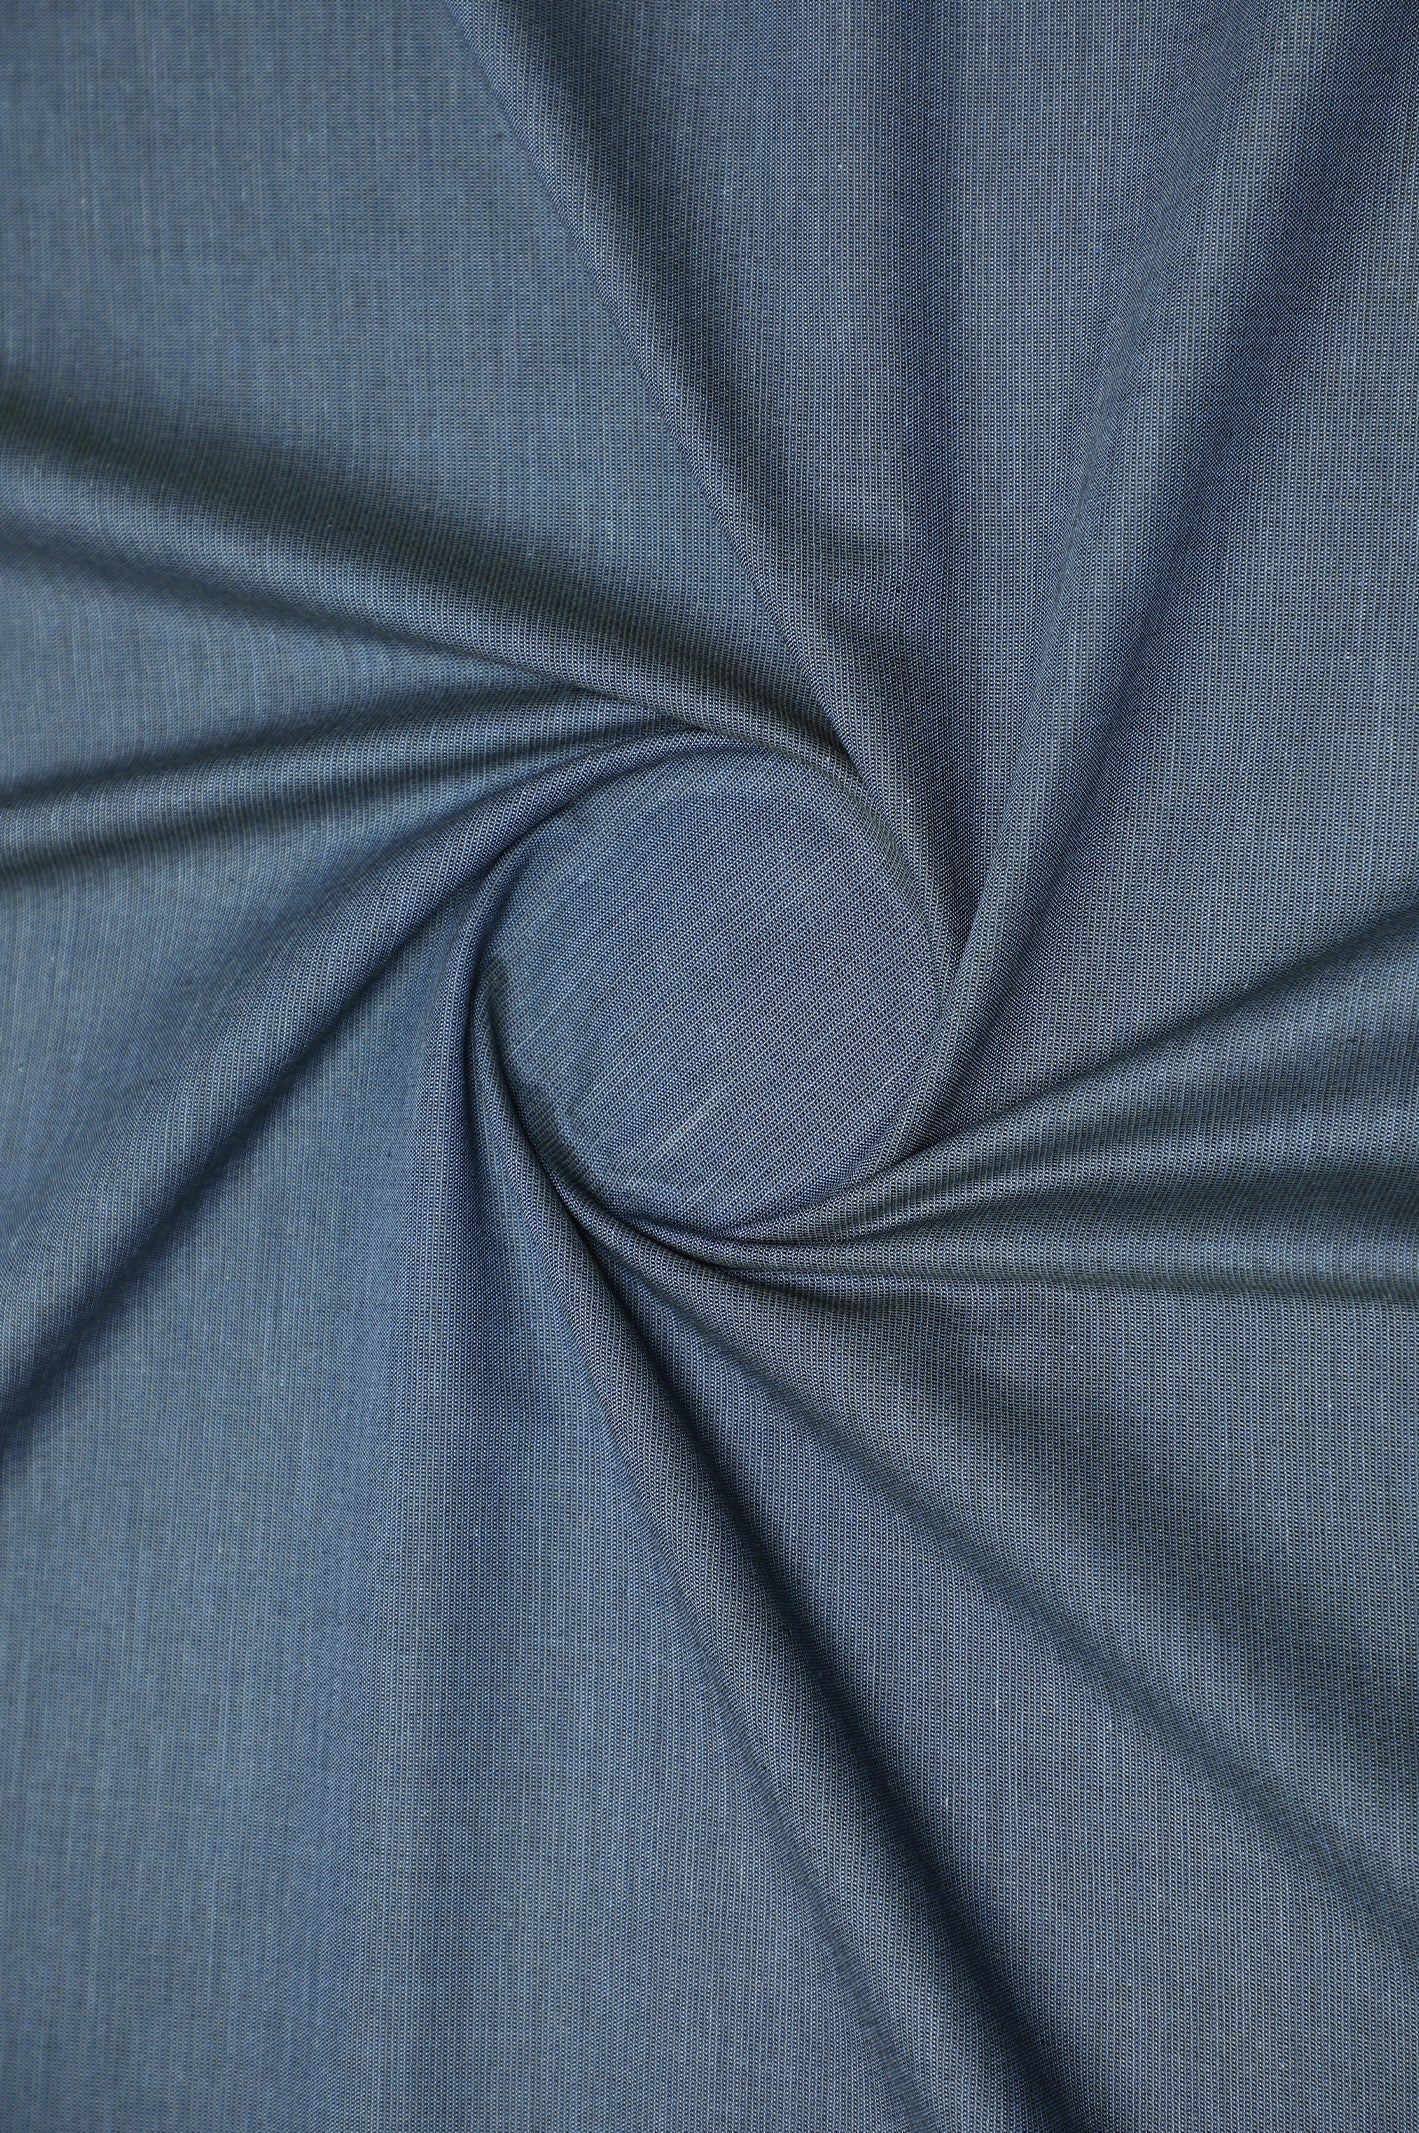 Blue Blended Unstitched Fabric for Men